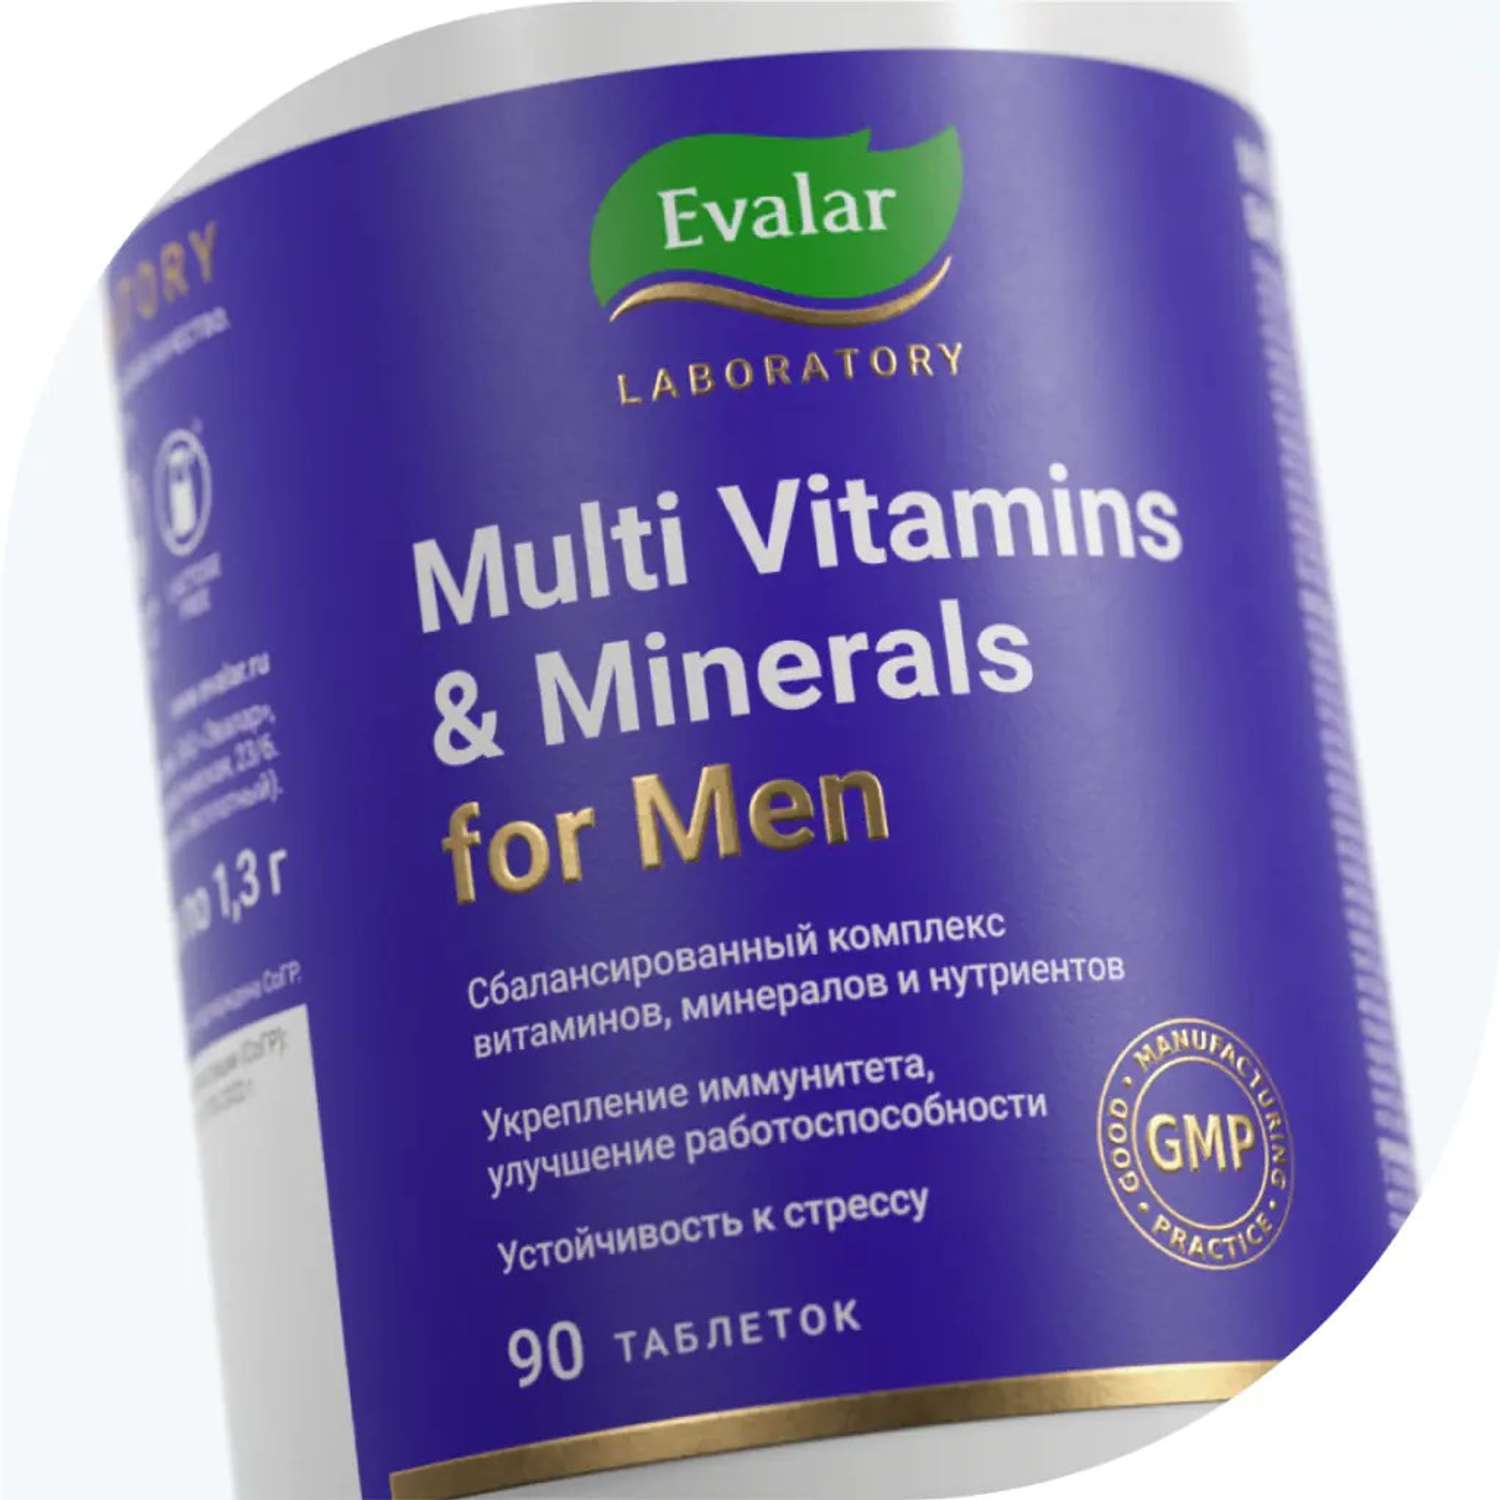 БАД Эвалар Мультивитамины и минералы мужские 90 таблеток - фото 5